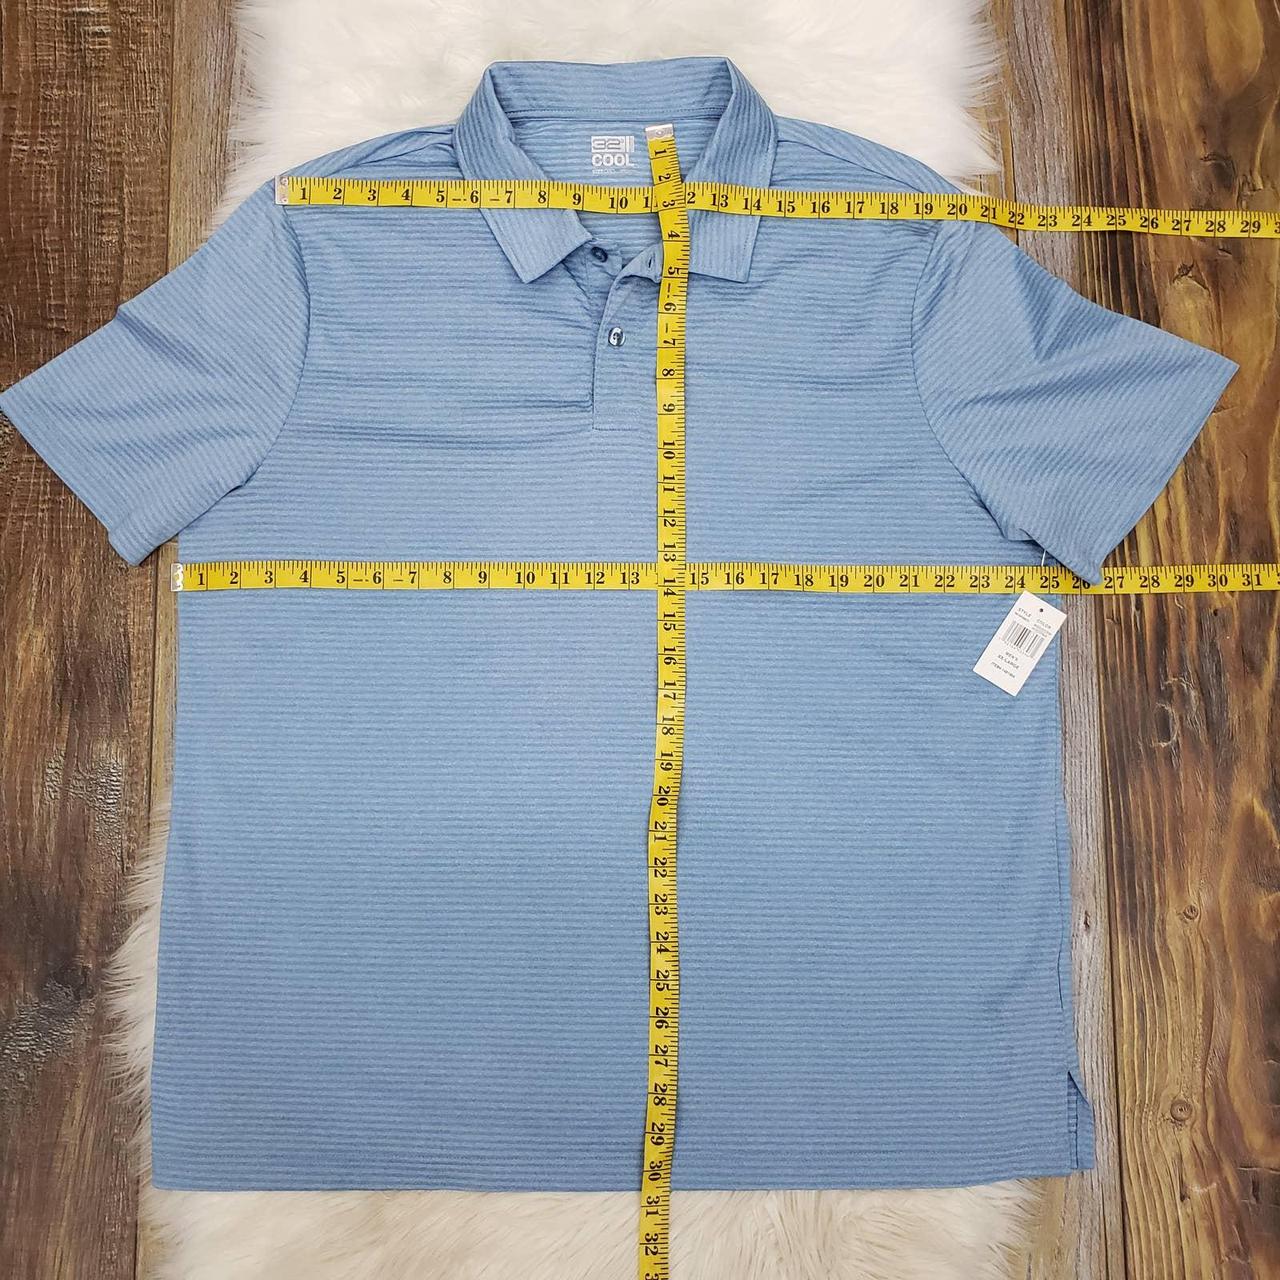 32 DEGREES Cool Polo Shirt Blue Striped Moisture... - Depop